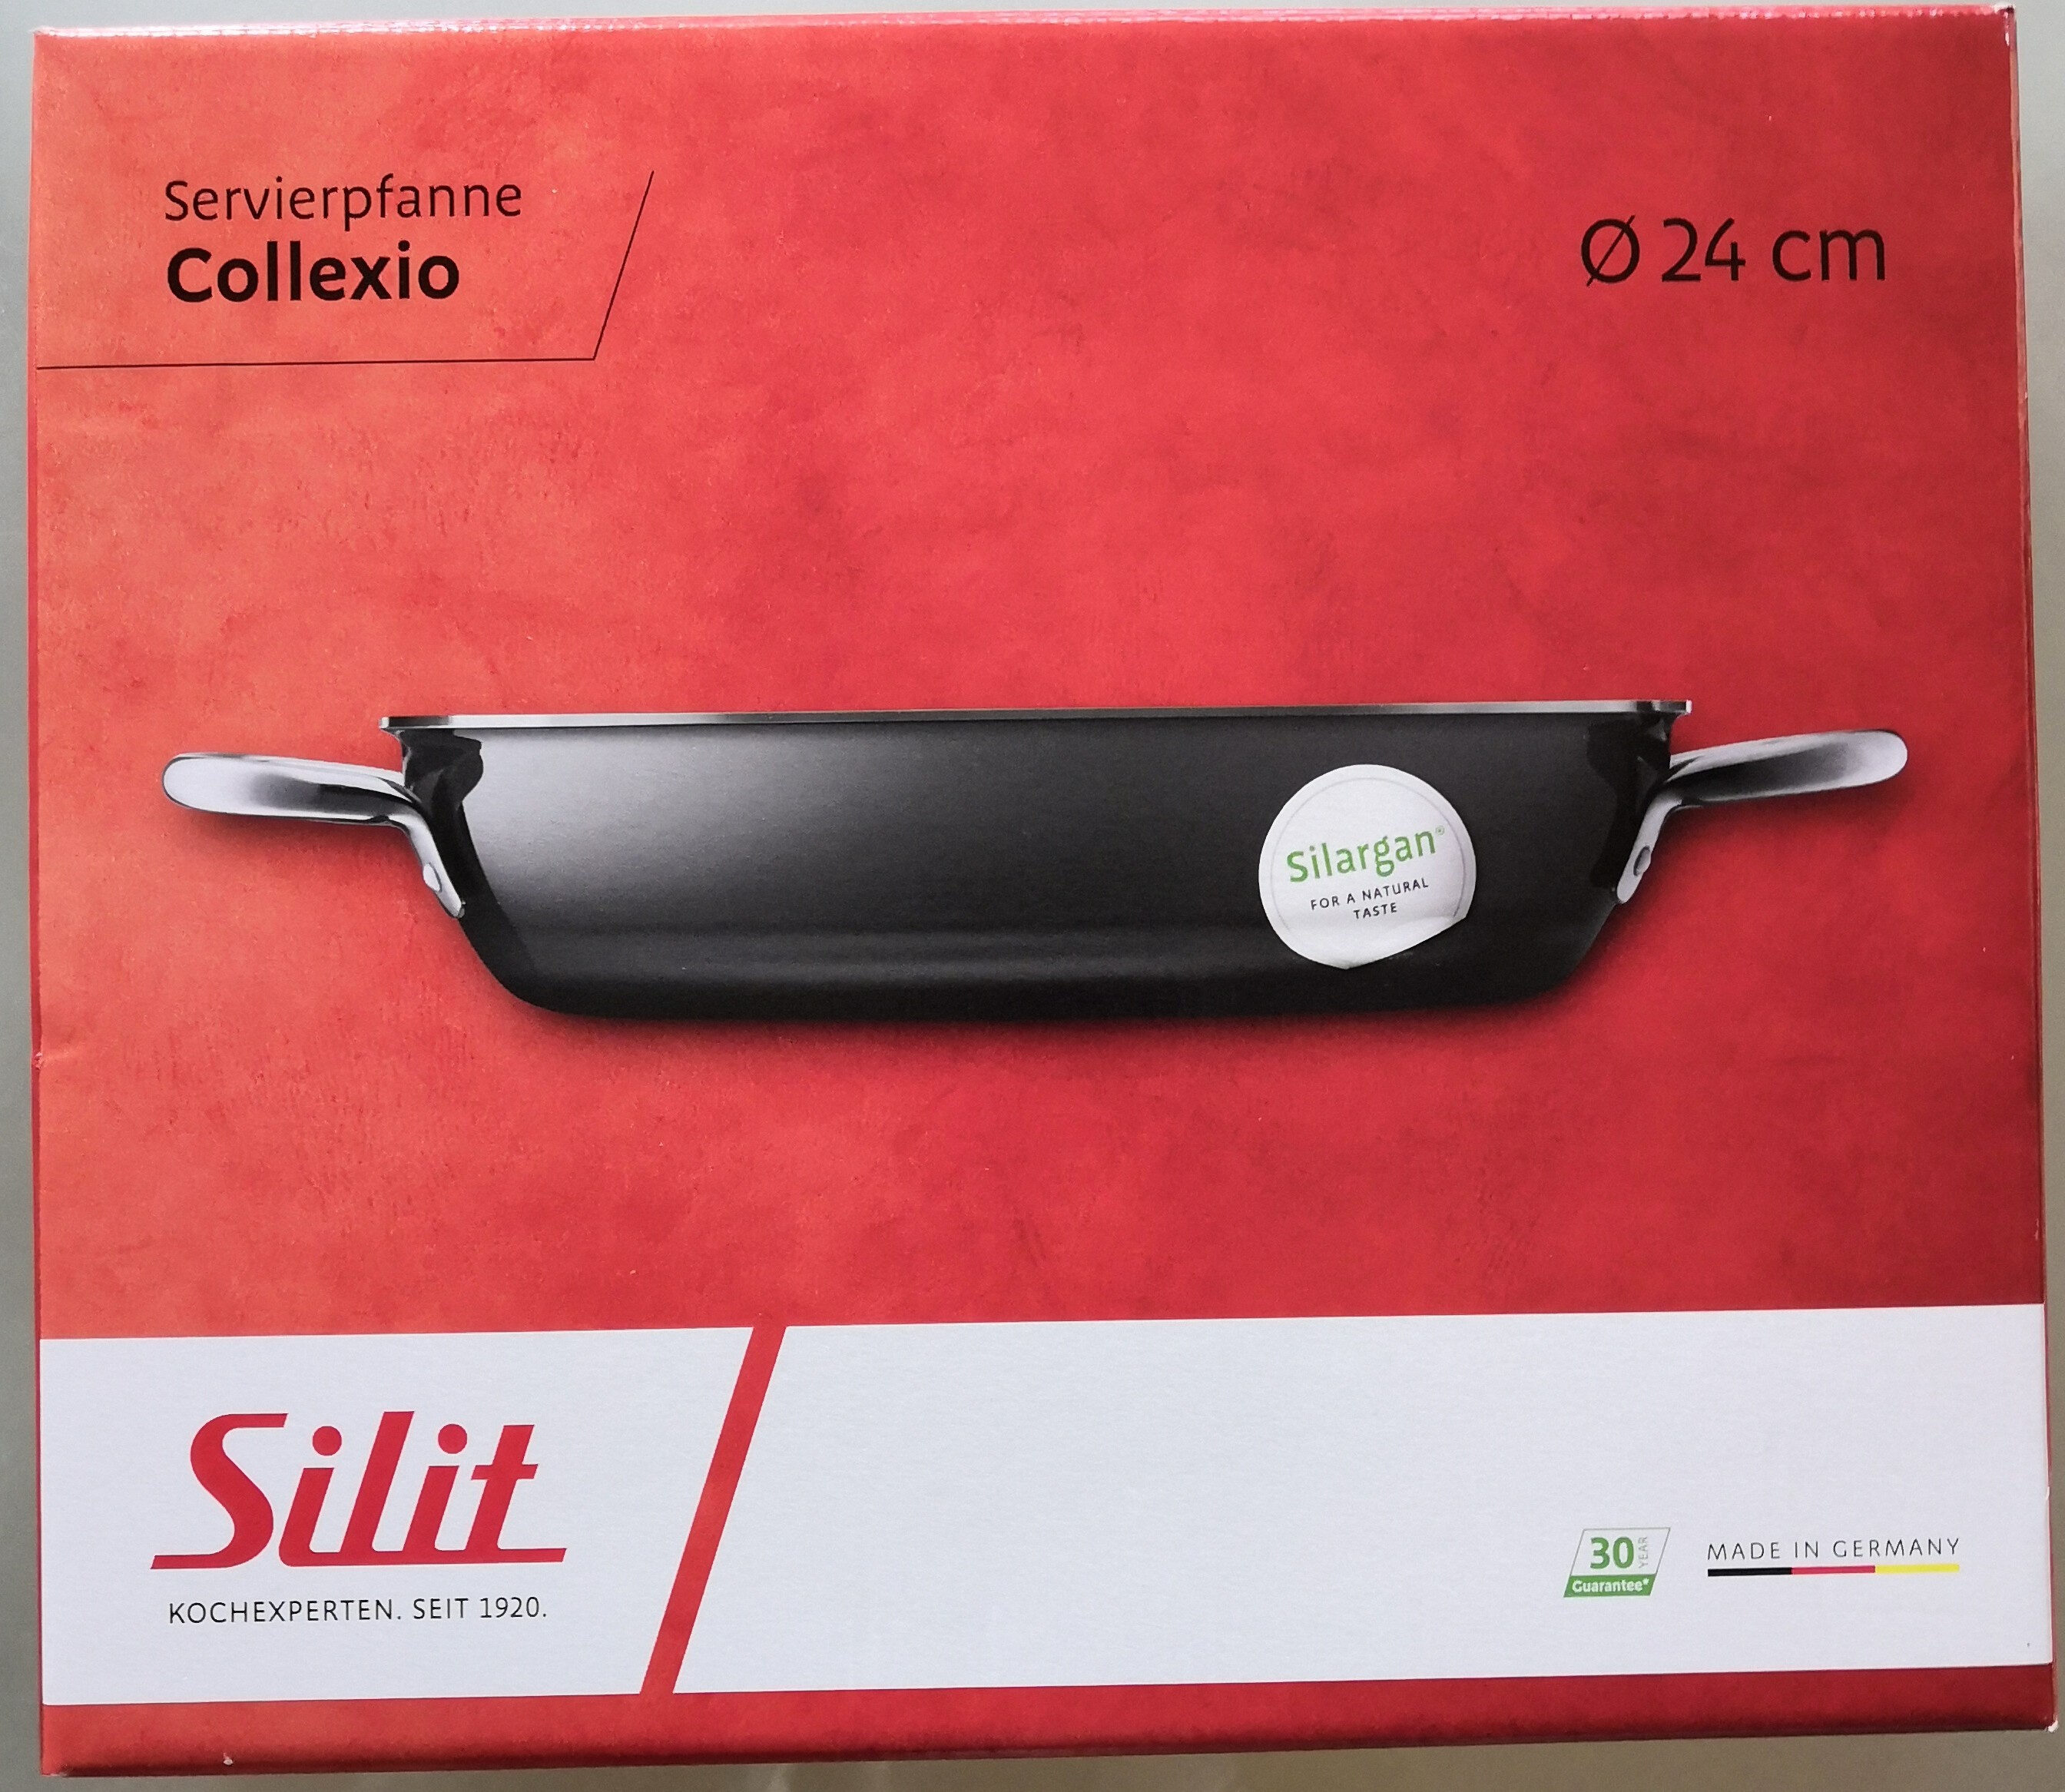 Silit Collexio Servierpfanne 24 cm - Product - de